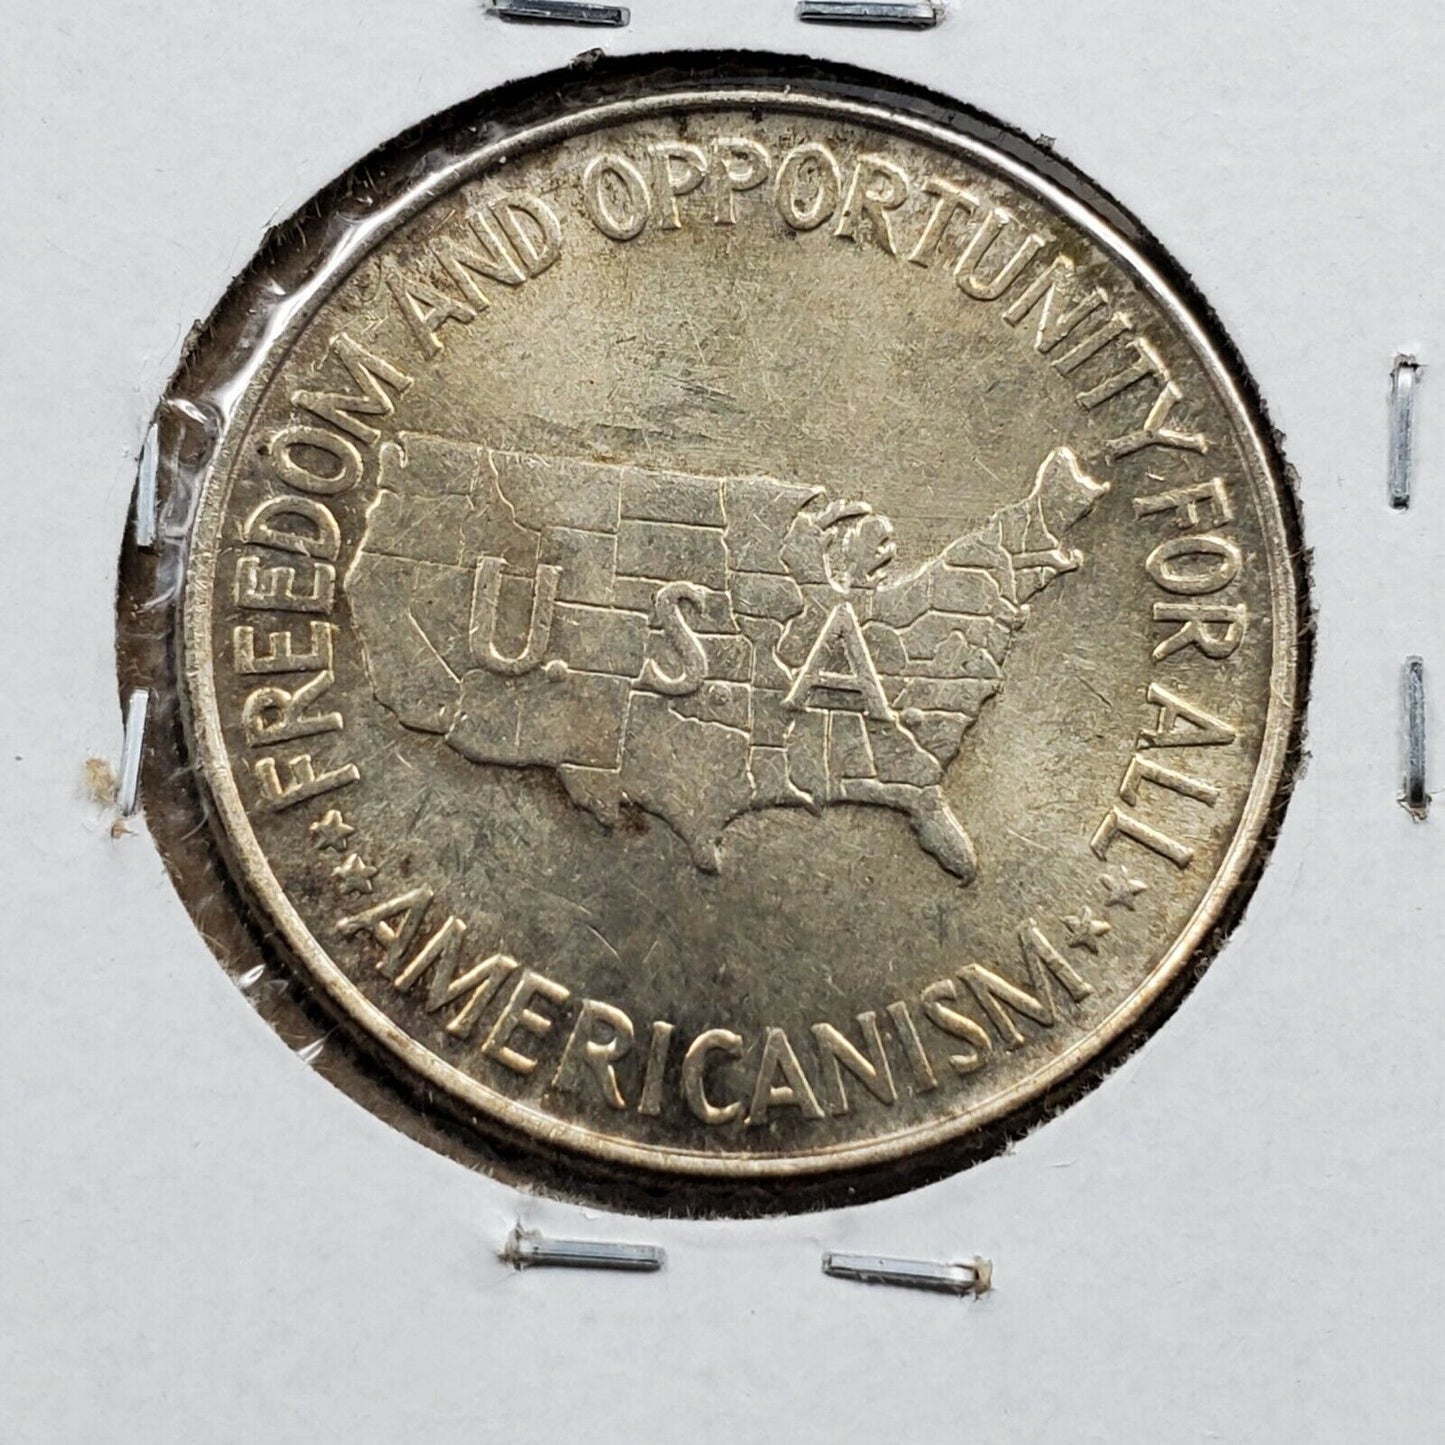 1952 P George Washington Carver Silver 50c Half Dollar Commemorative BU UNC